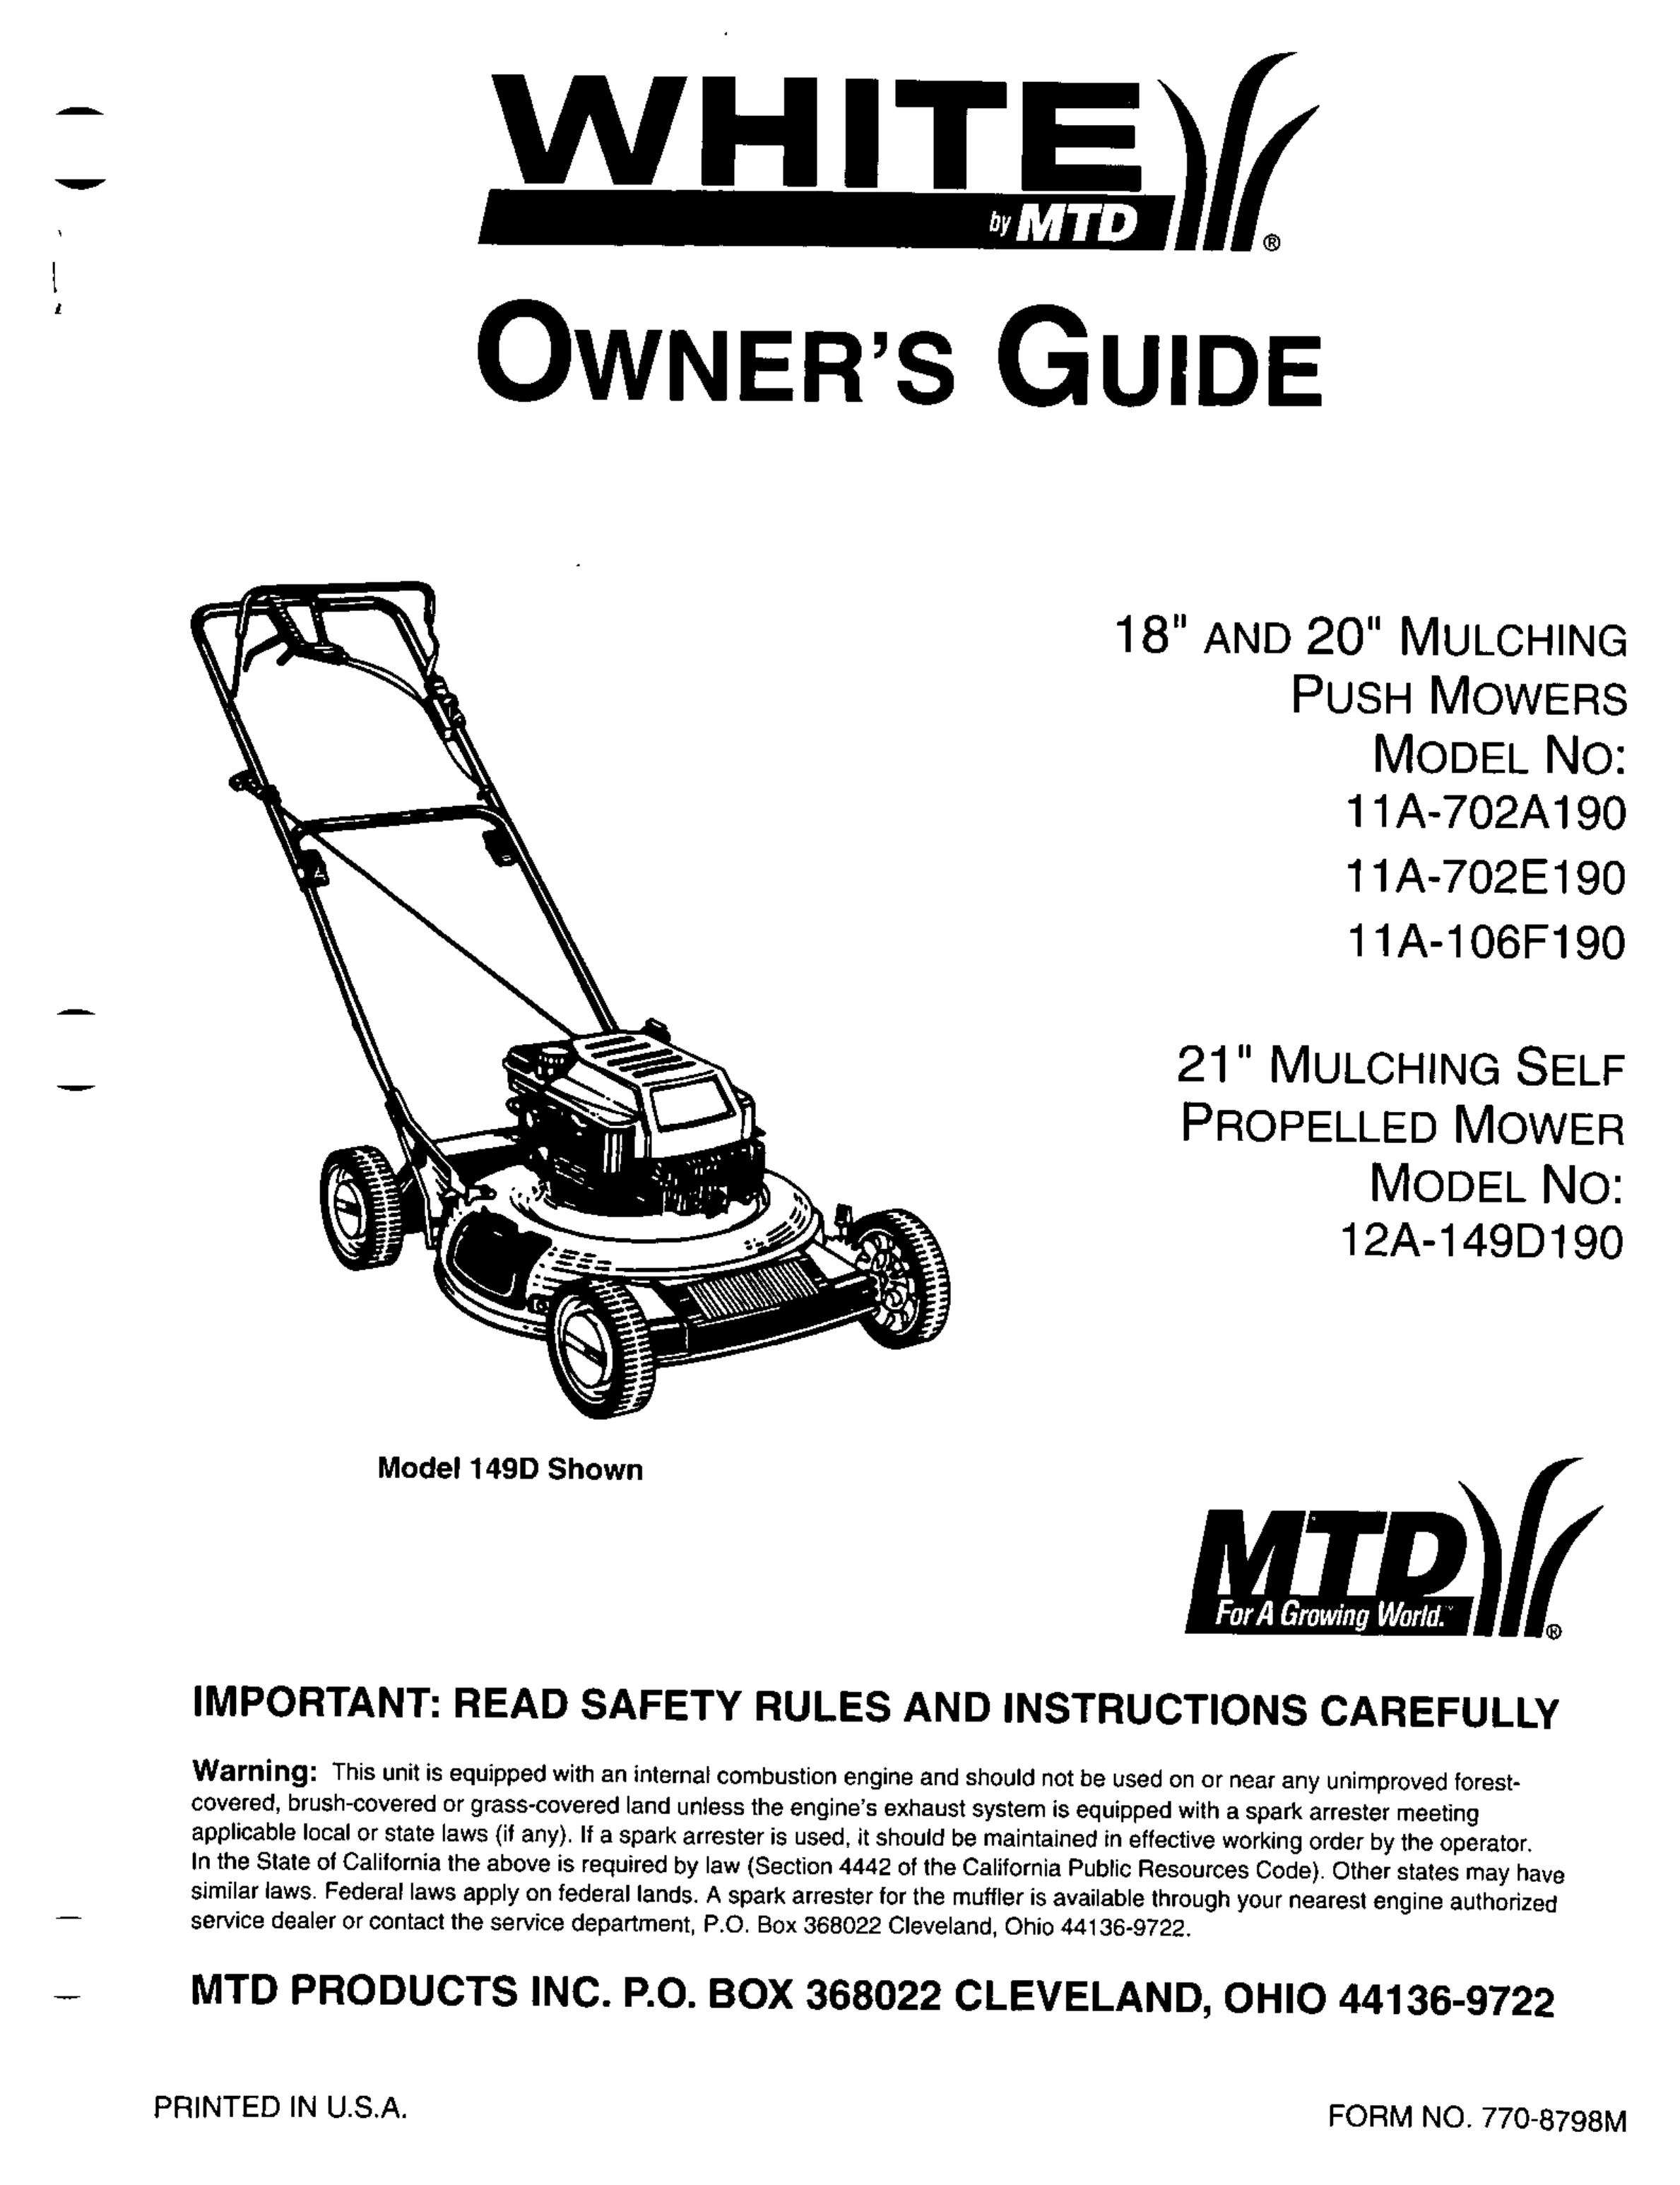 White 11A-702A190 Lawn Mower User Manual